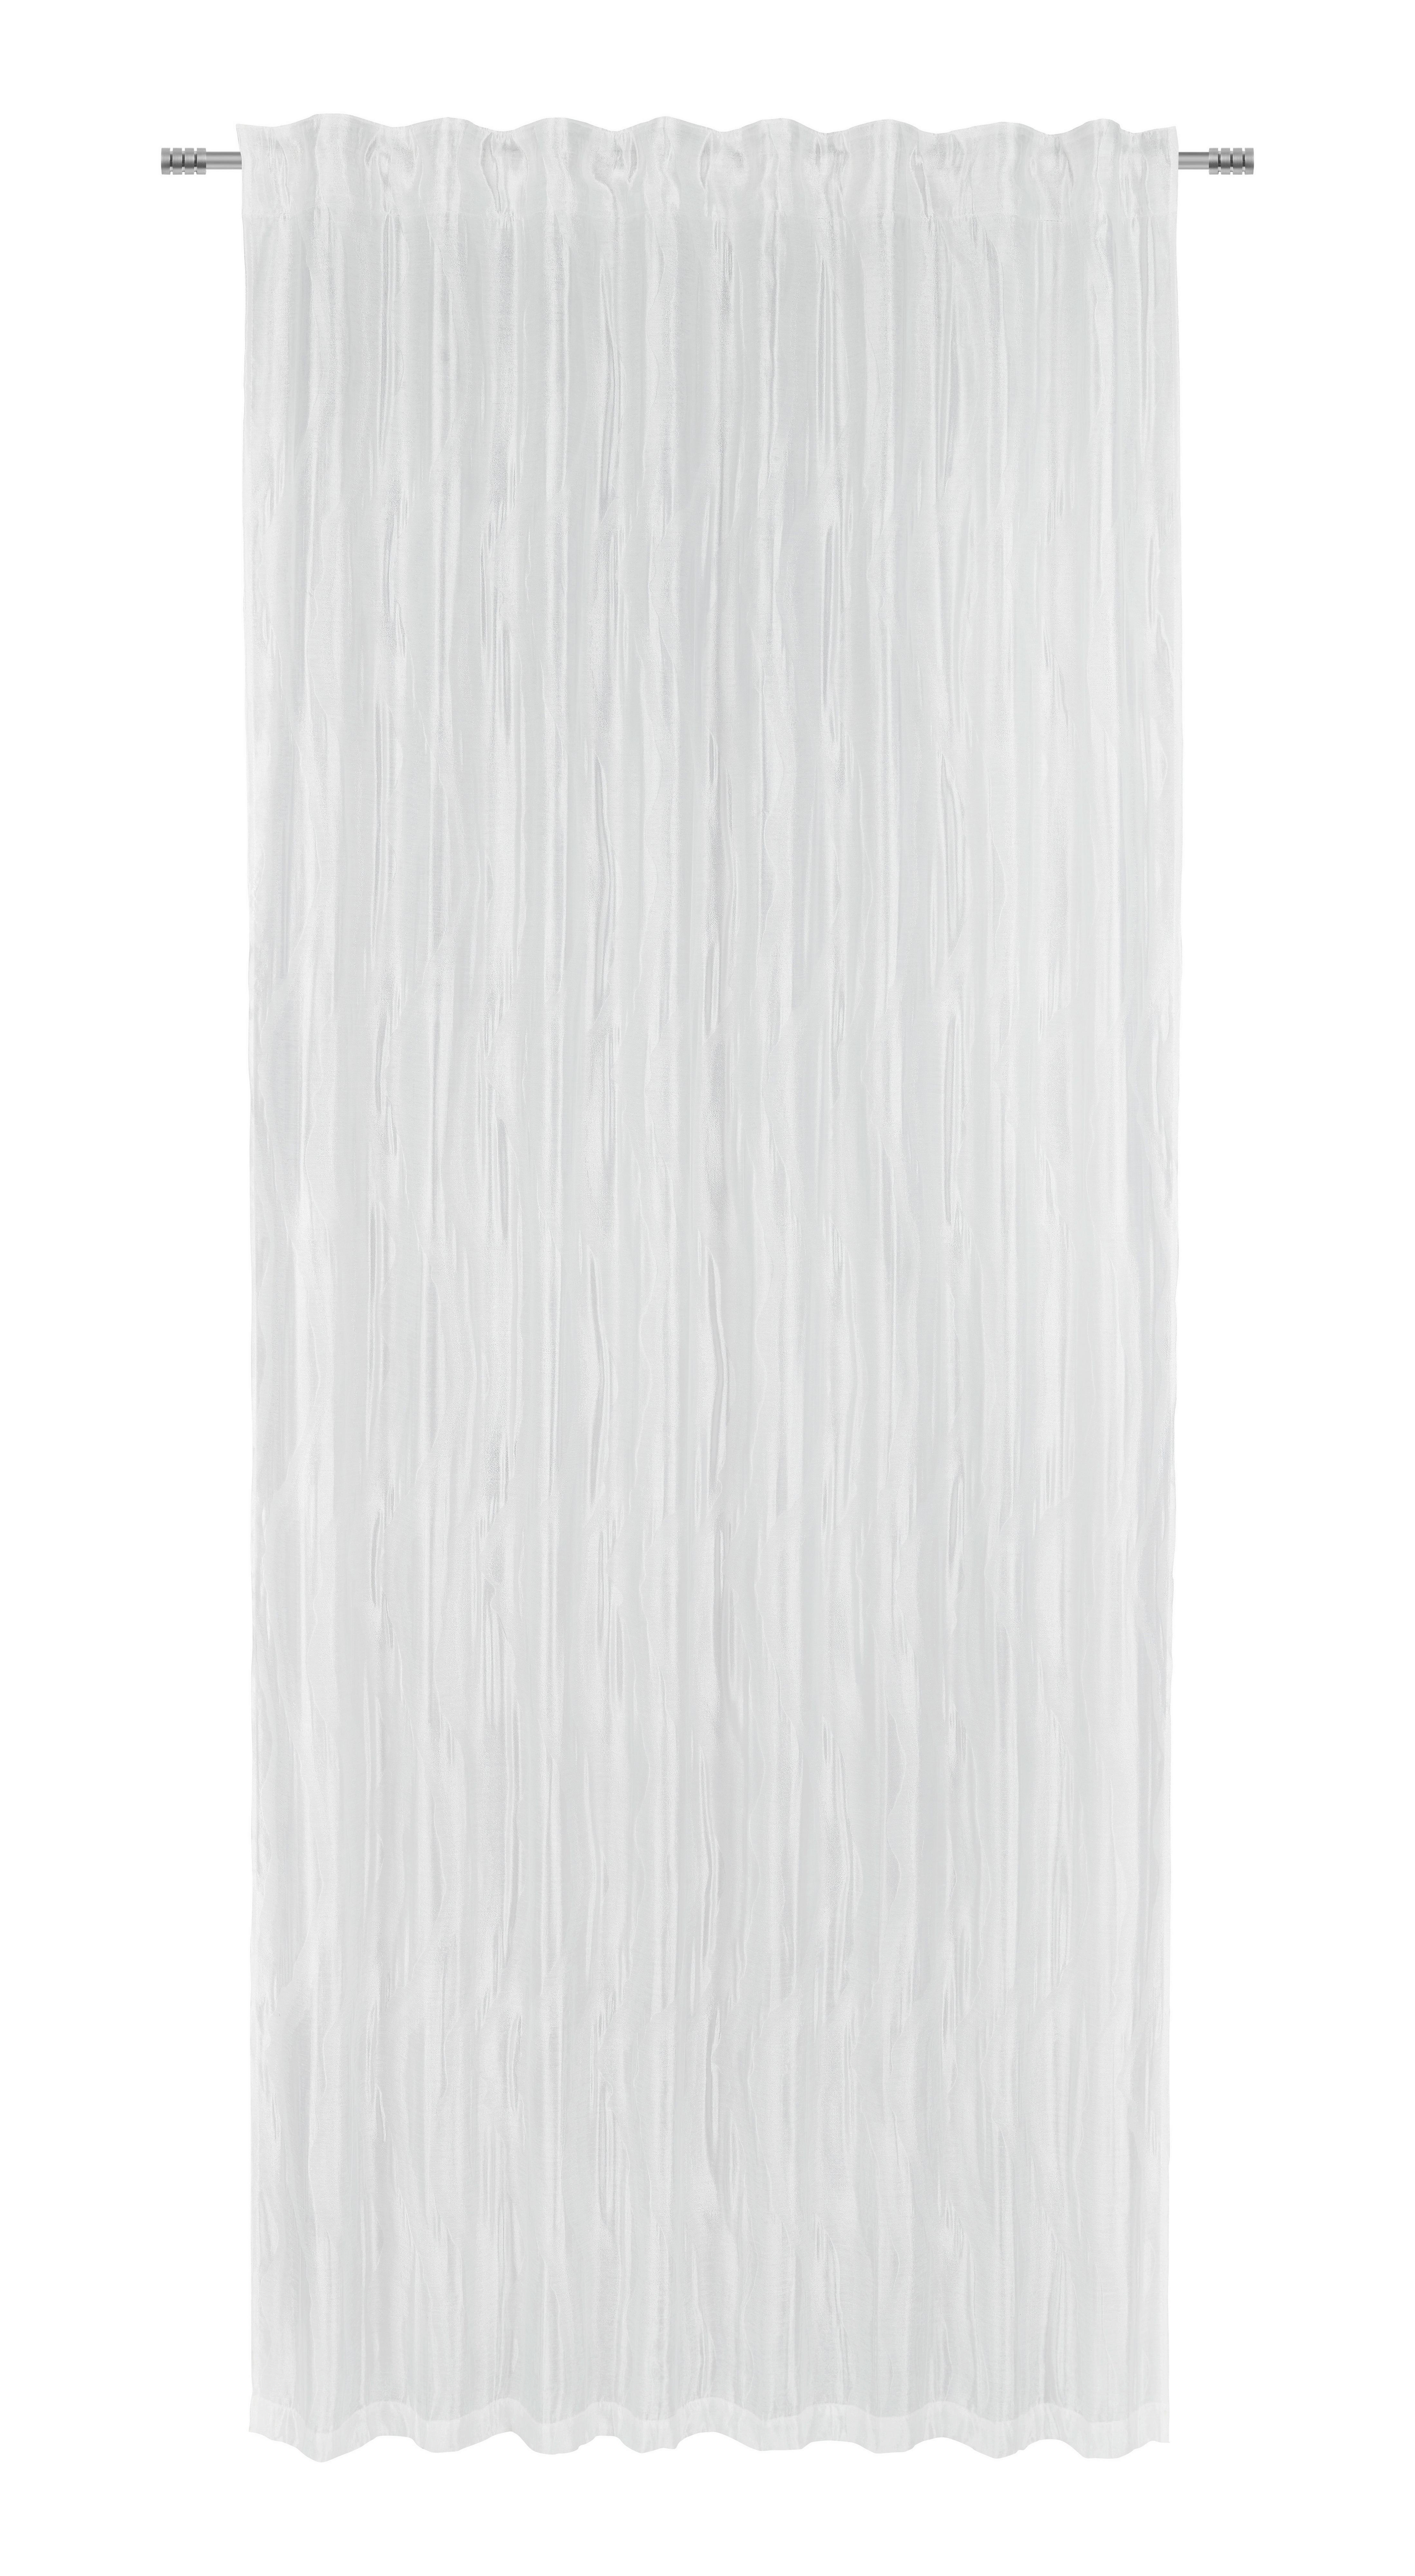 Fertigvorhang Phil in Weiß ca. 135x255cm - Weiß, ROMANTIK / LANDHAUS, Textil (135/255cm) - Premium Living